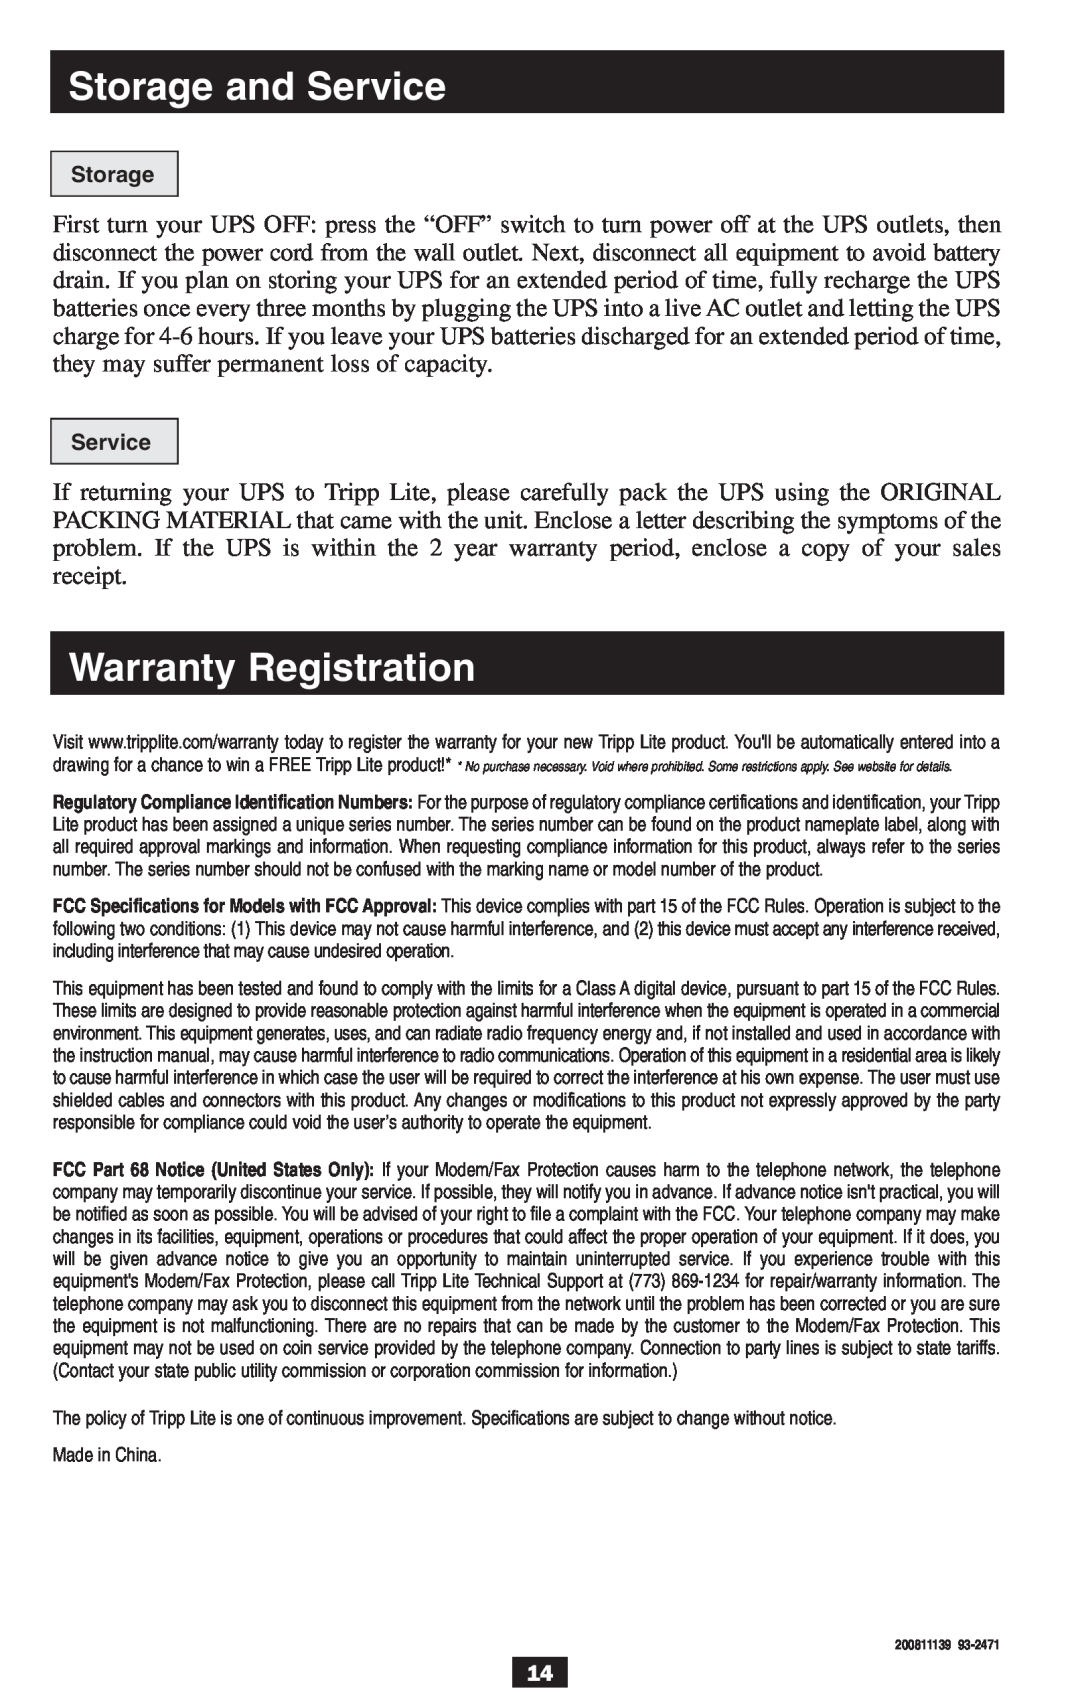 Tripp Lite 2-9USTAND owner manual Storage and Service, Warranty Registration 